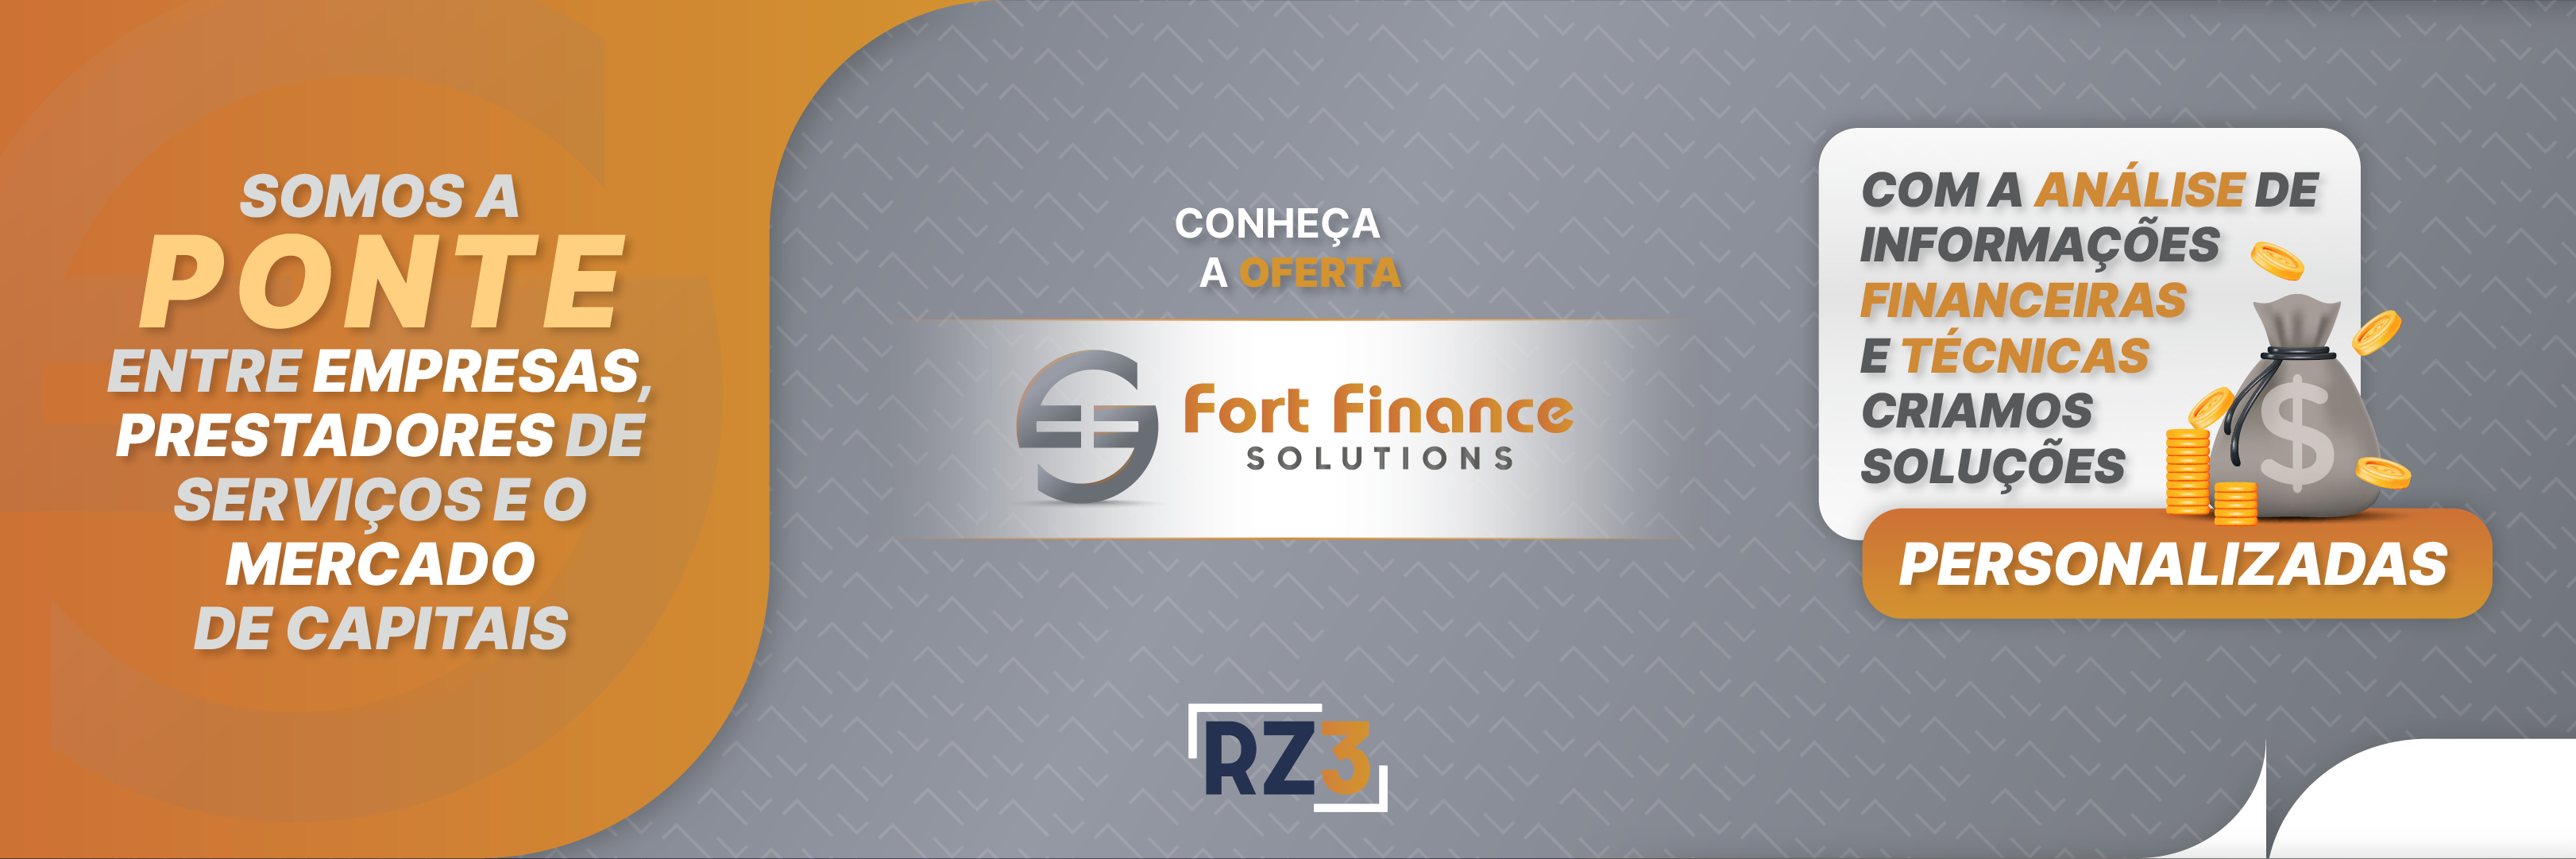 Linkedin_Oferta5_FortFinanceSolutions